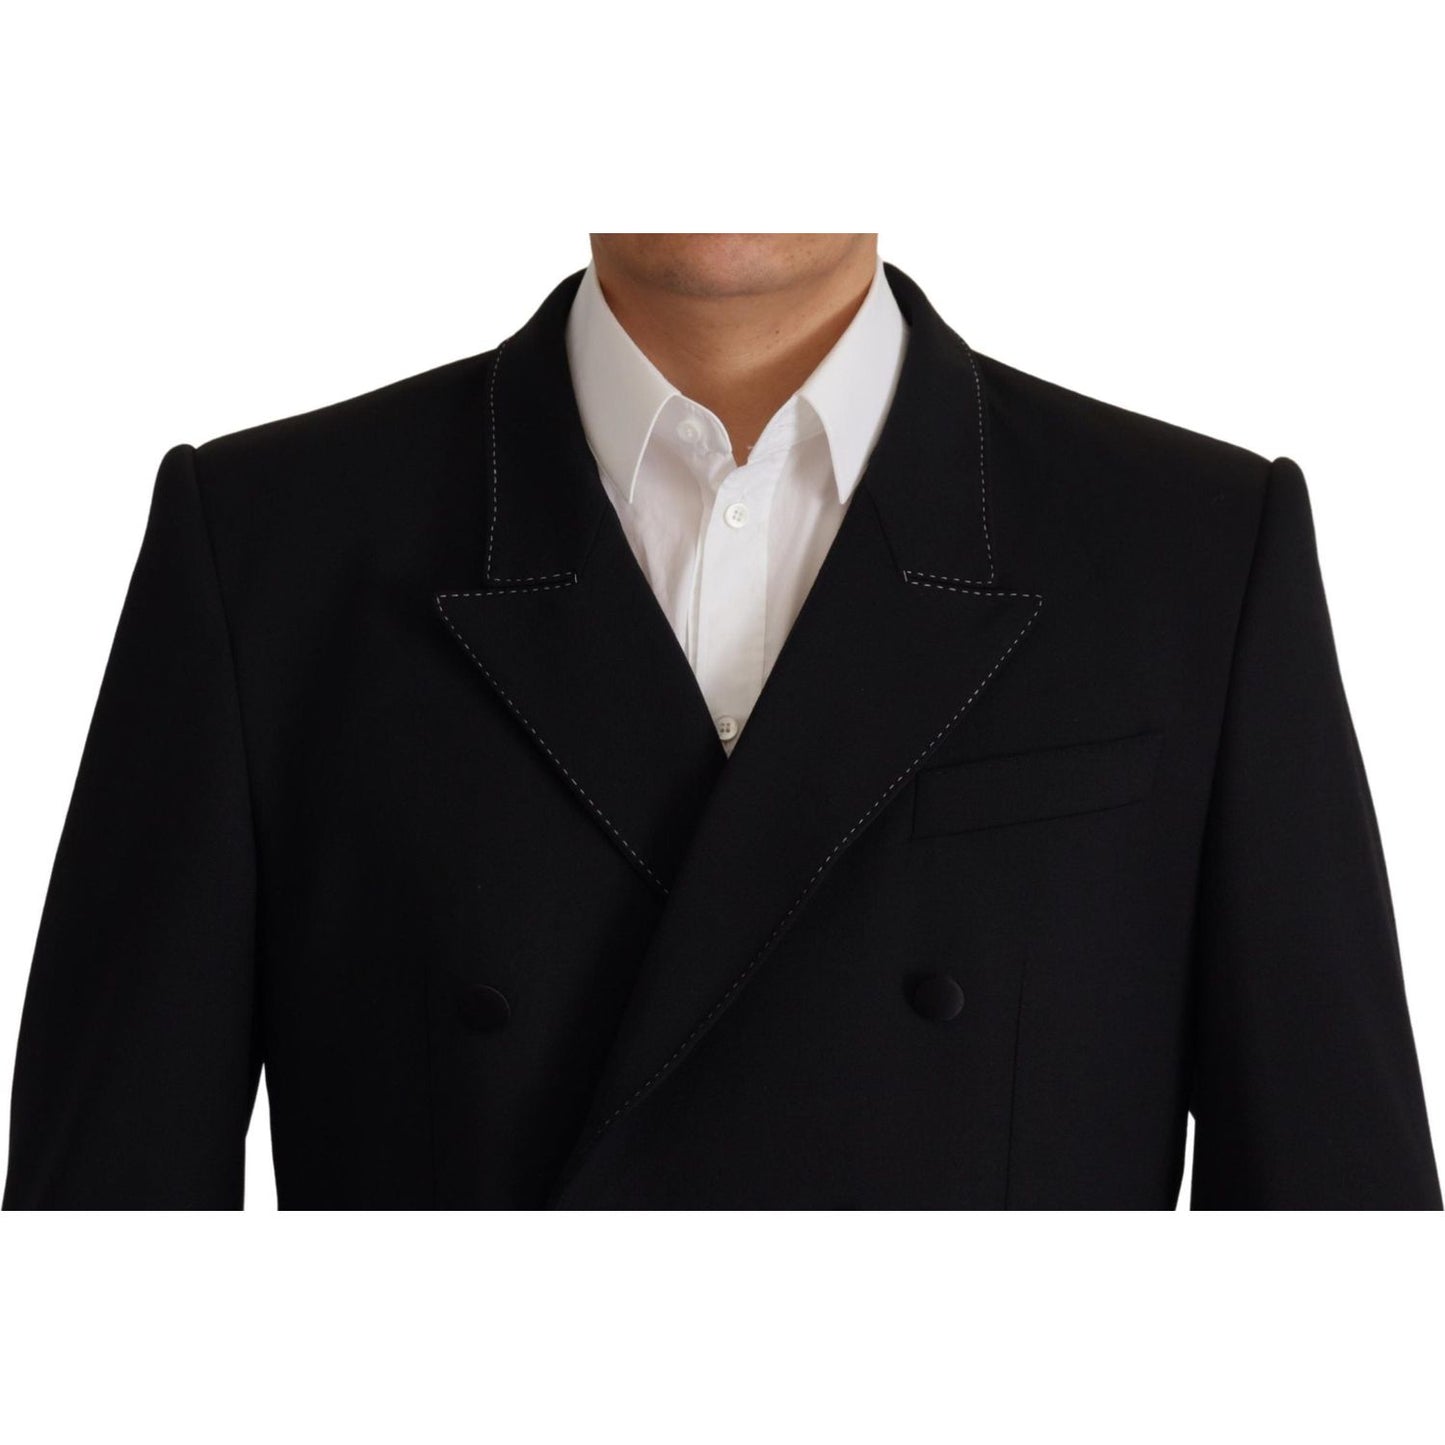 Dolce & Gabbana Elegant Double Breasted Wool Blazer black-double-breasted-coat-blazer-jacket